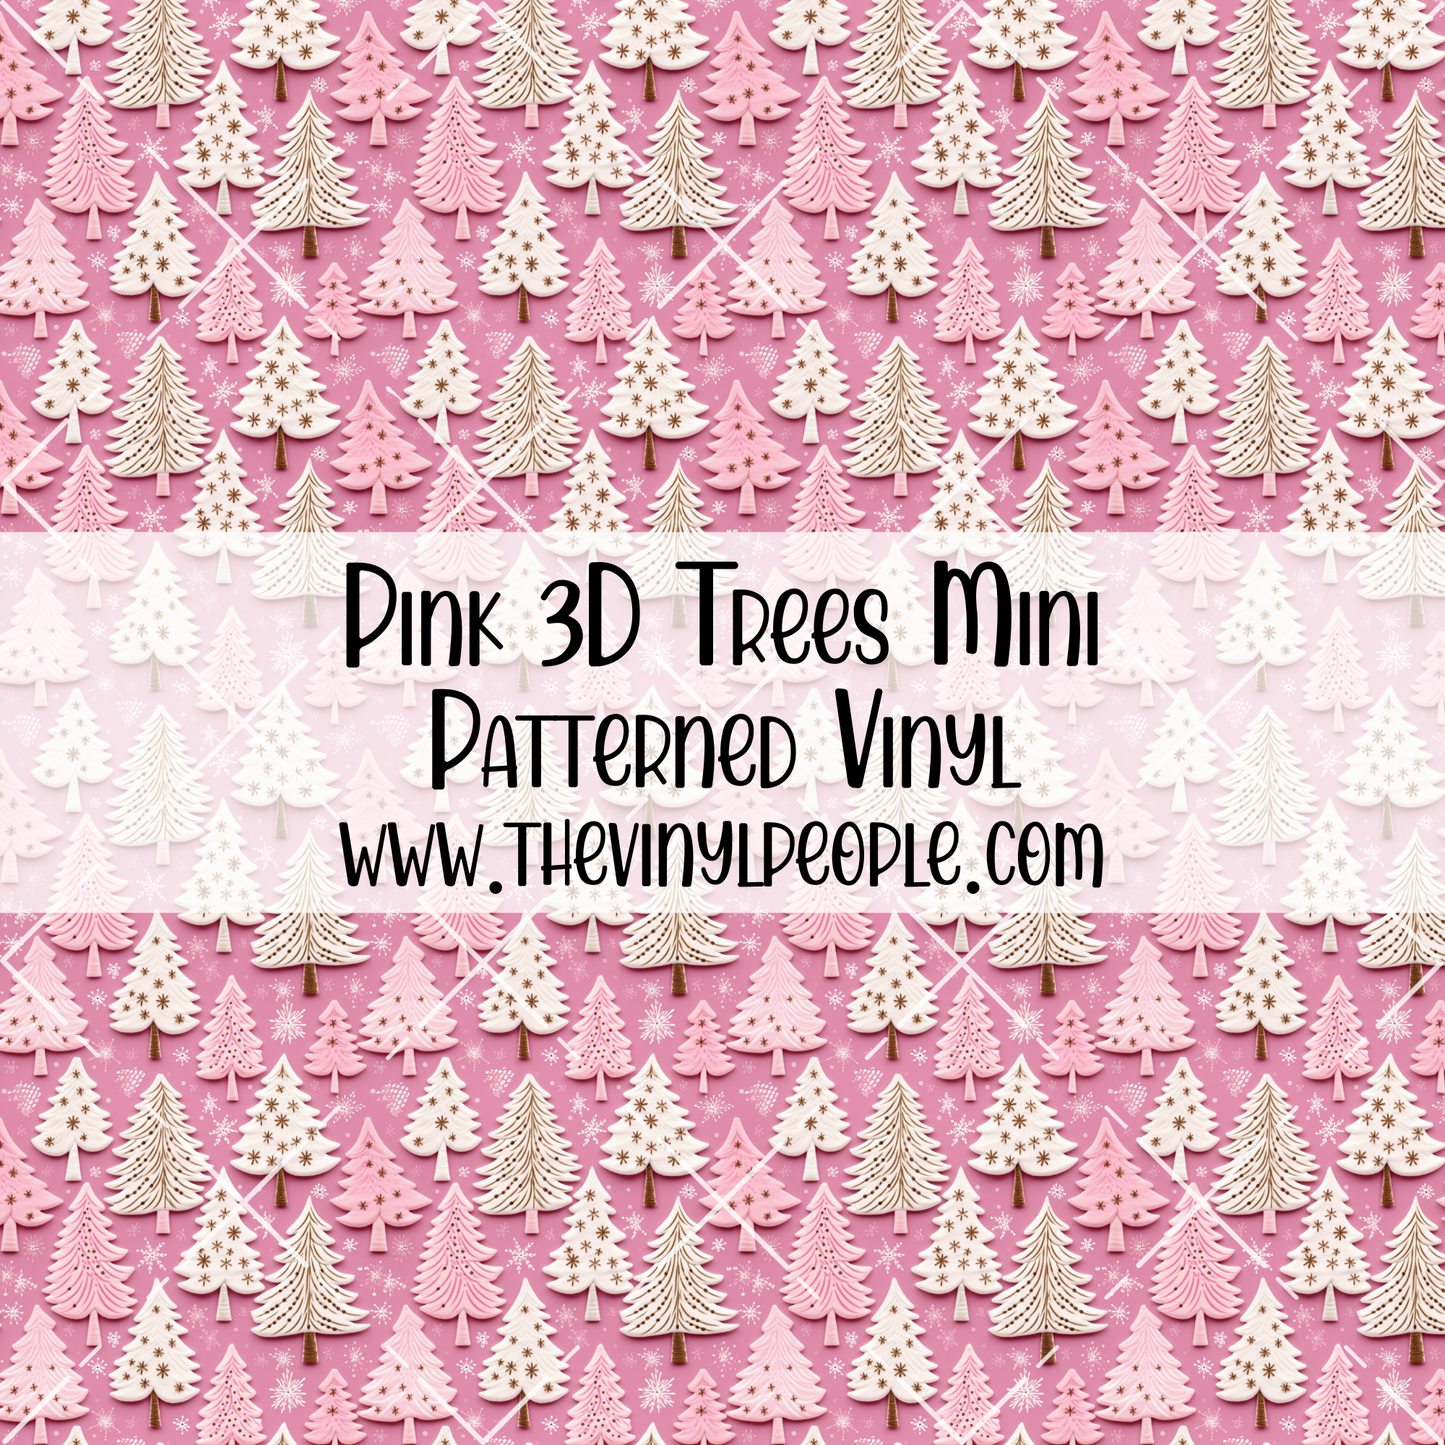 Pink 3D Trees Patterned Vinyl